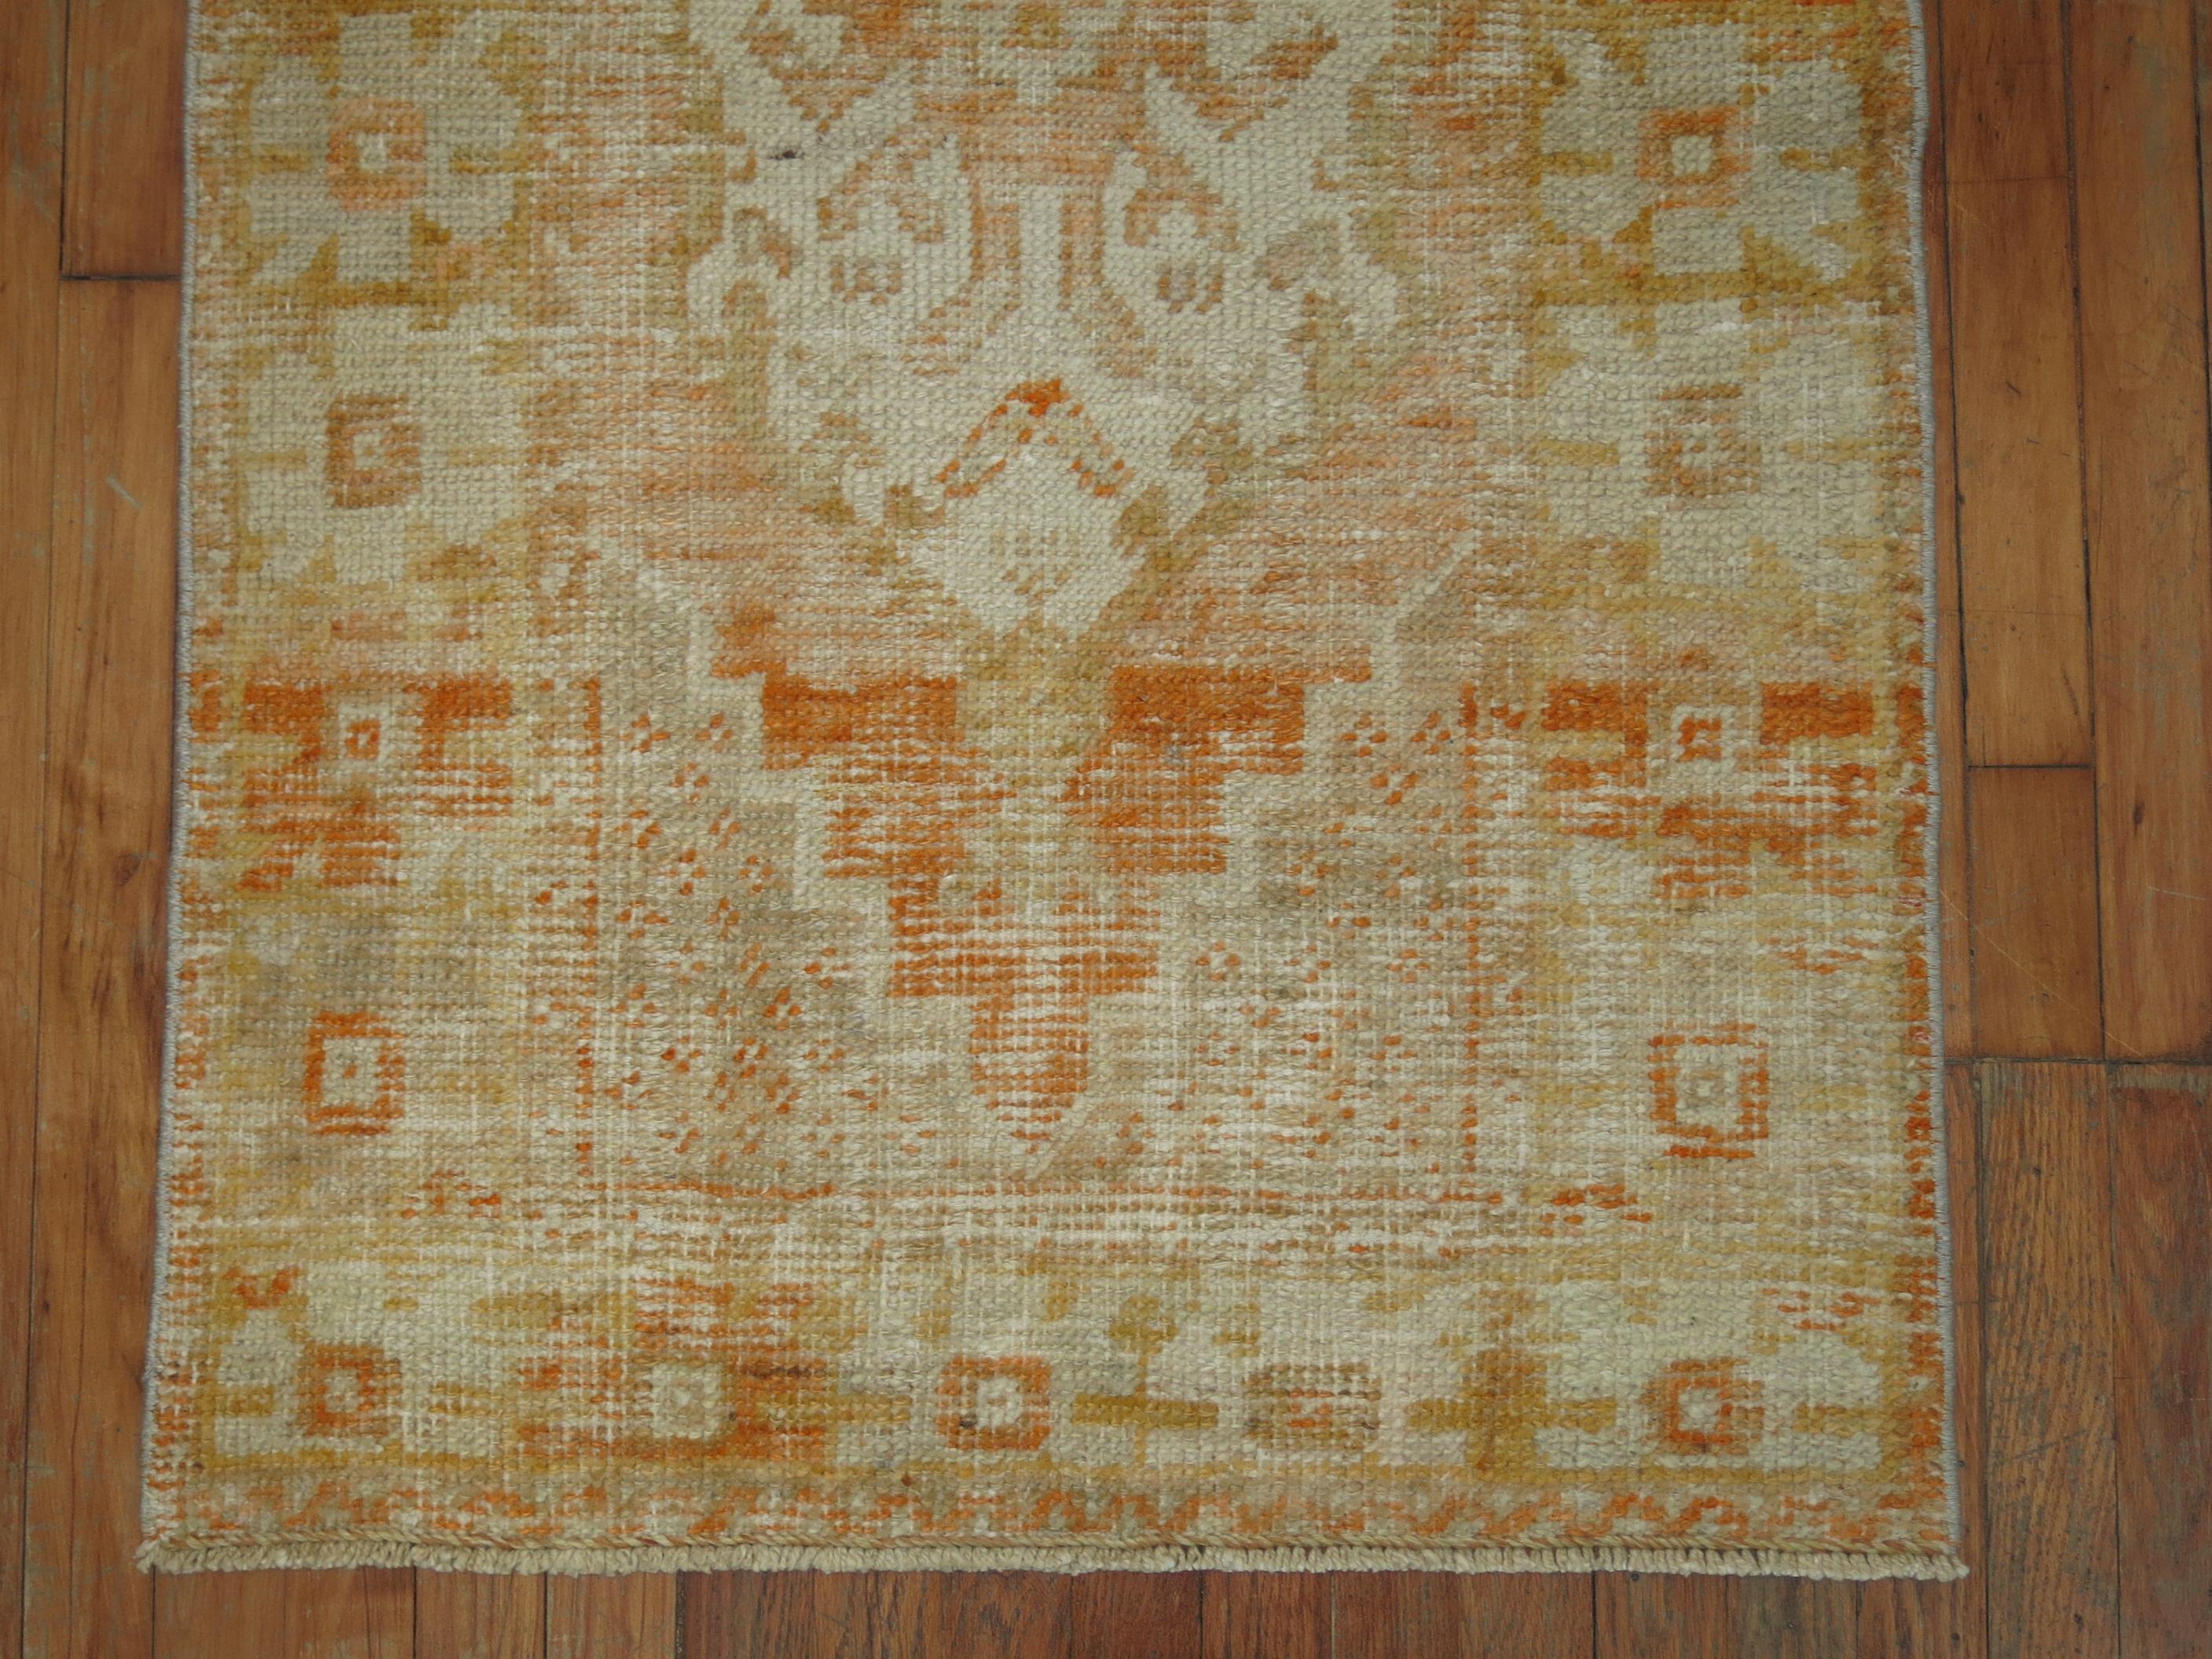 Shabby chic Turkish rug with pops of orange.

2'8'' x 4'9''